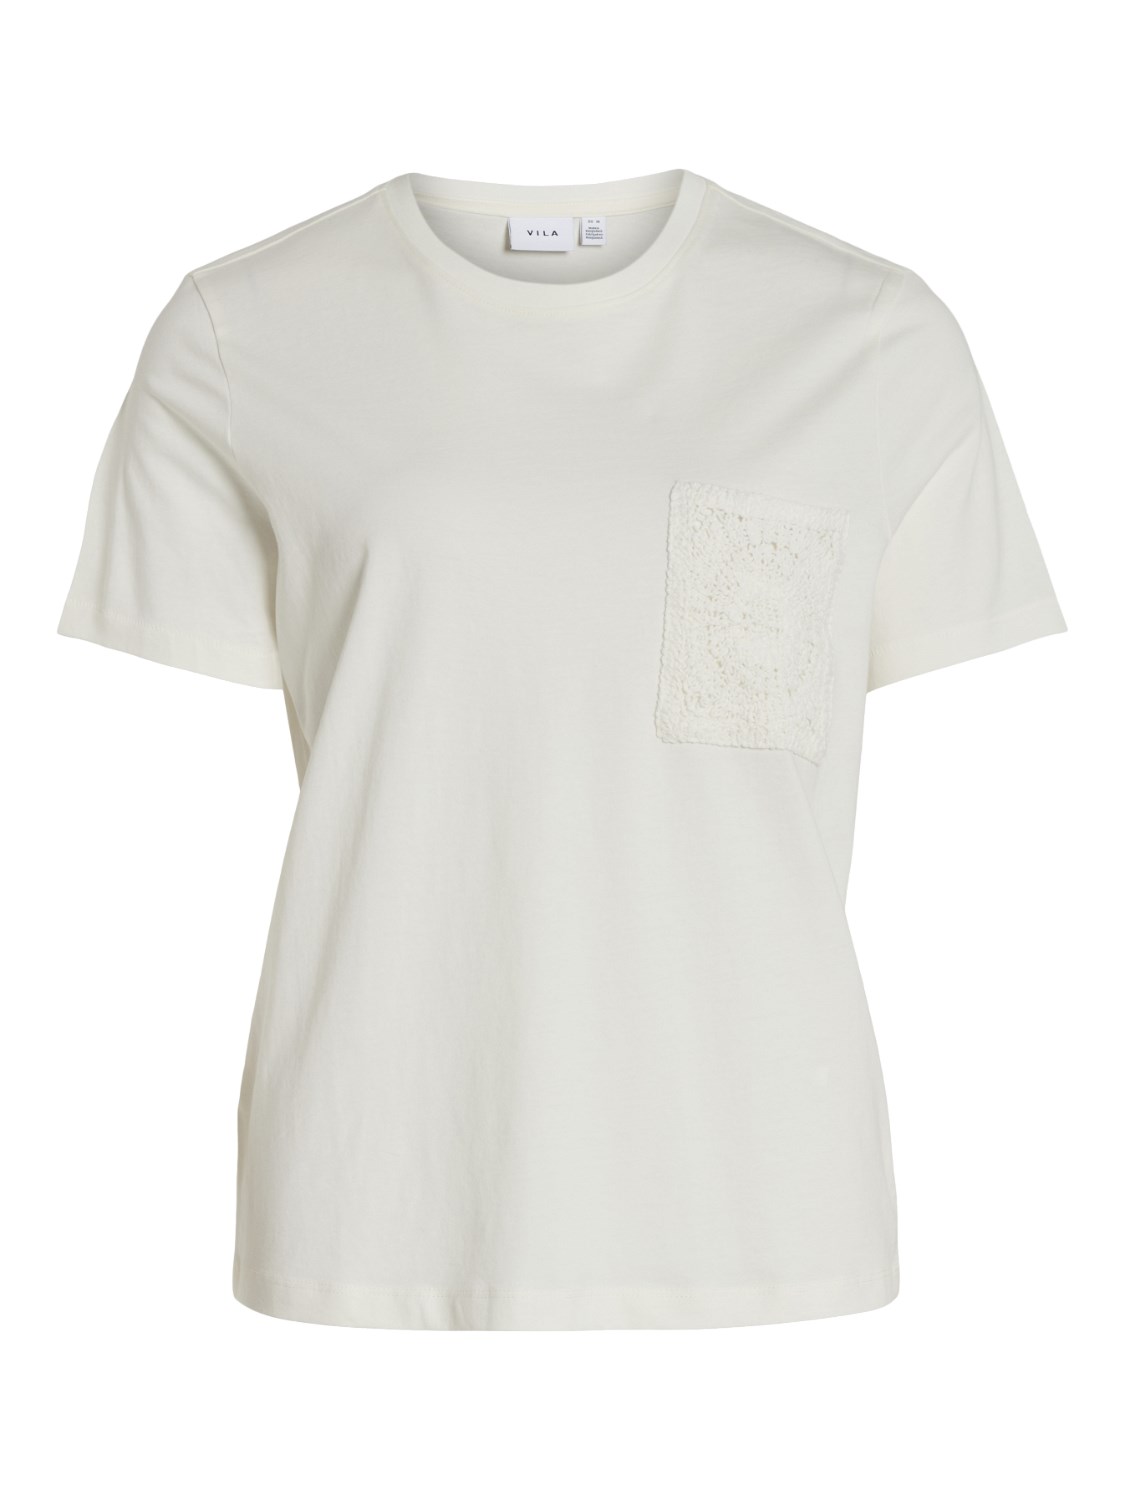 Camiseta Sybil Crochet blanco. Modelo 14093300.